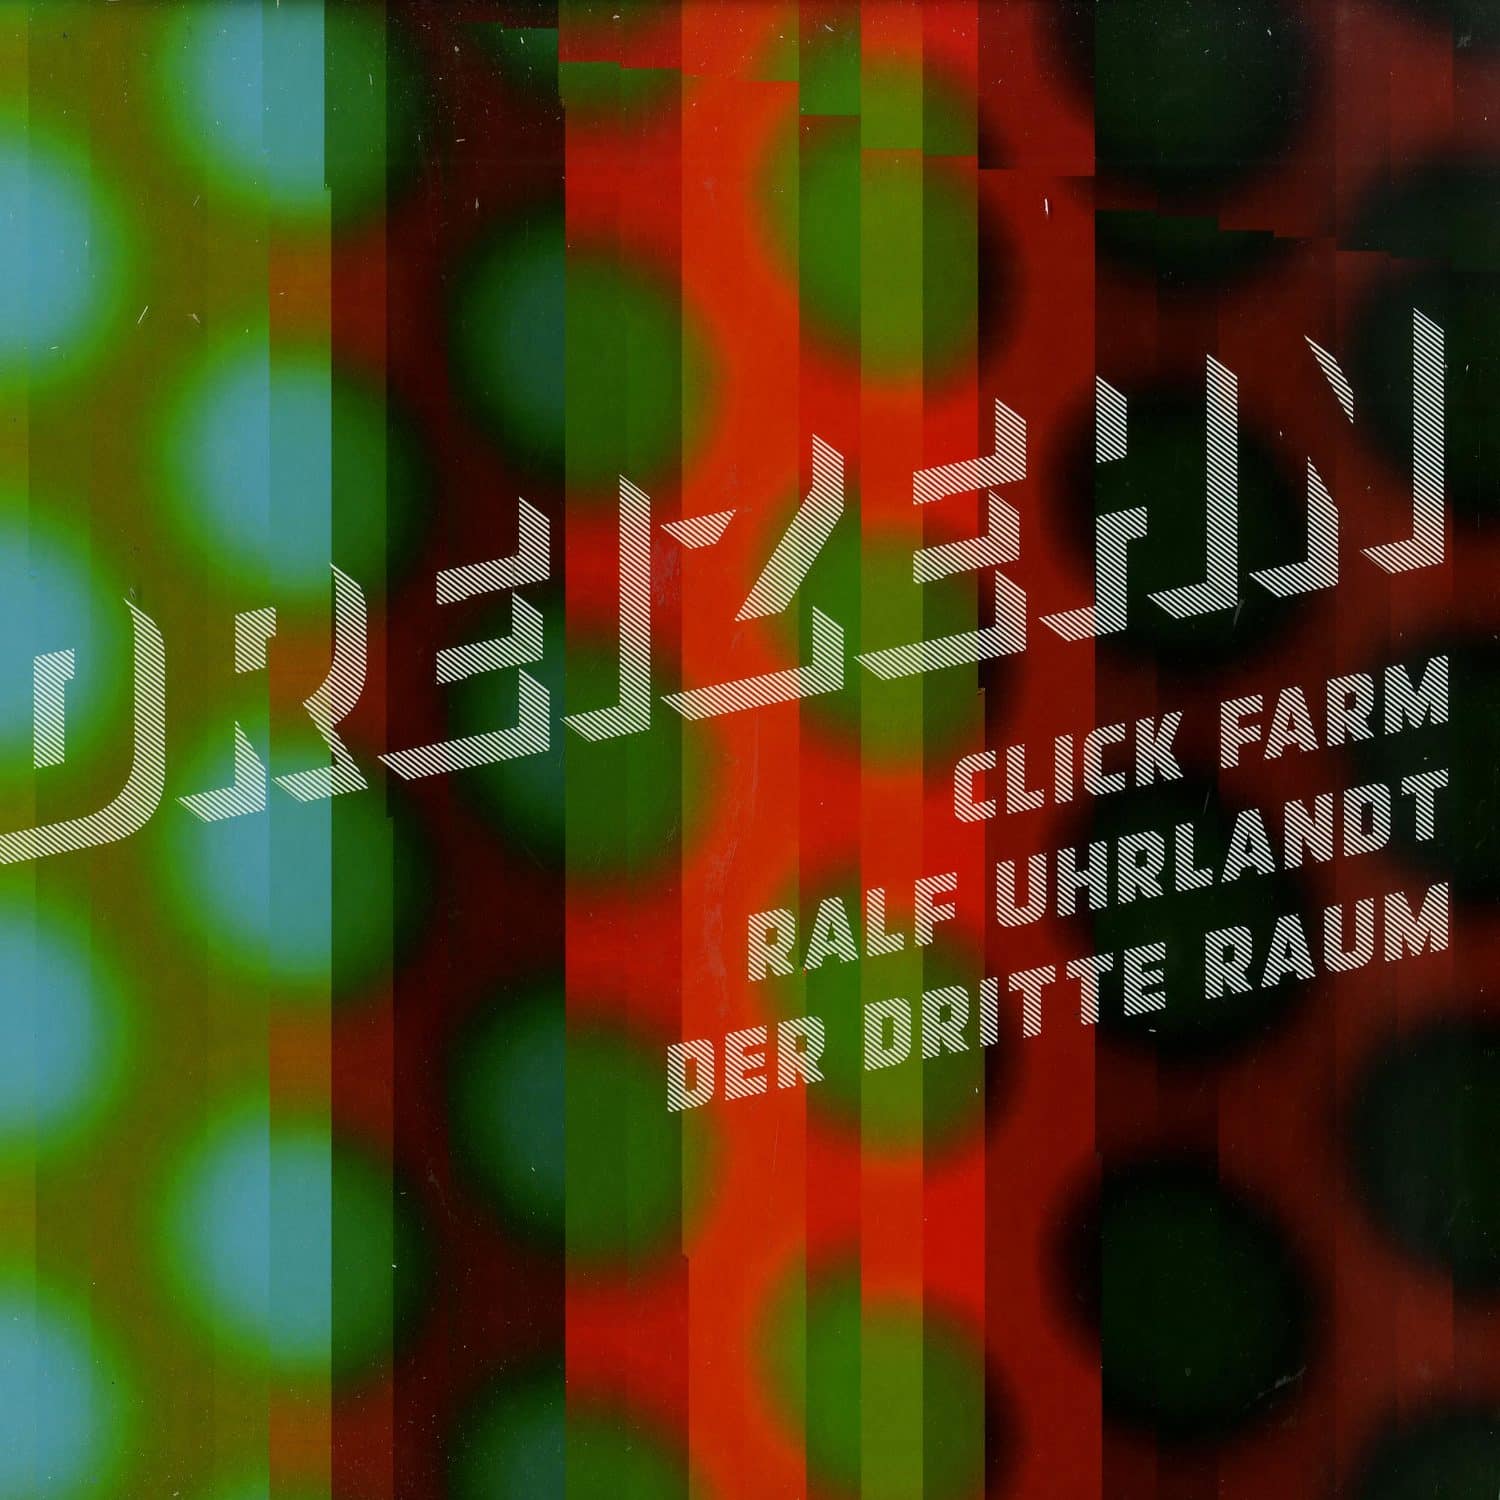 Der Dritte Raum, Ralf Uhrland, Click Far - DREIZEHN